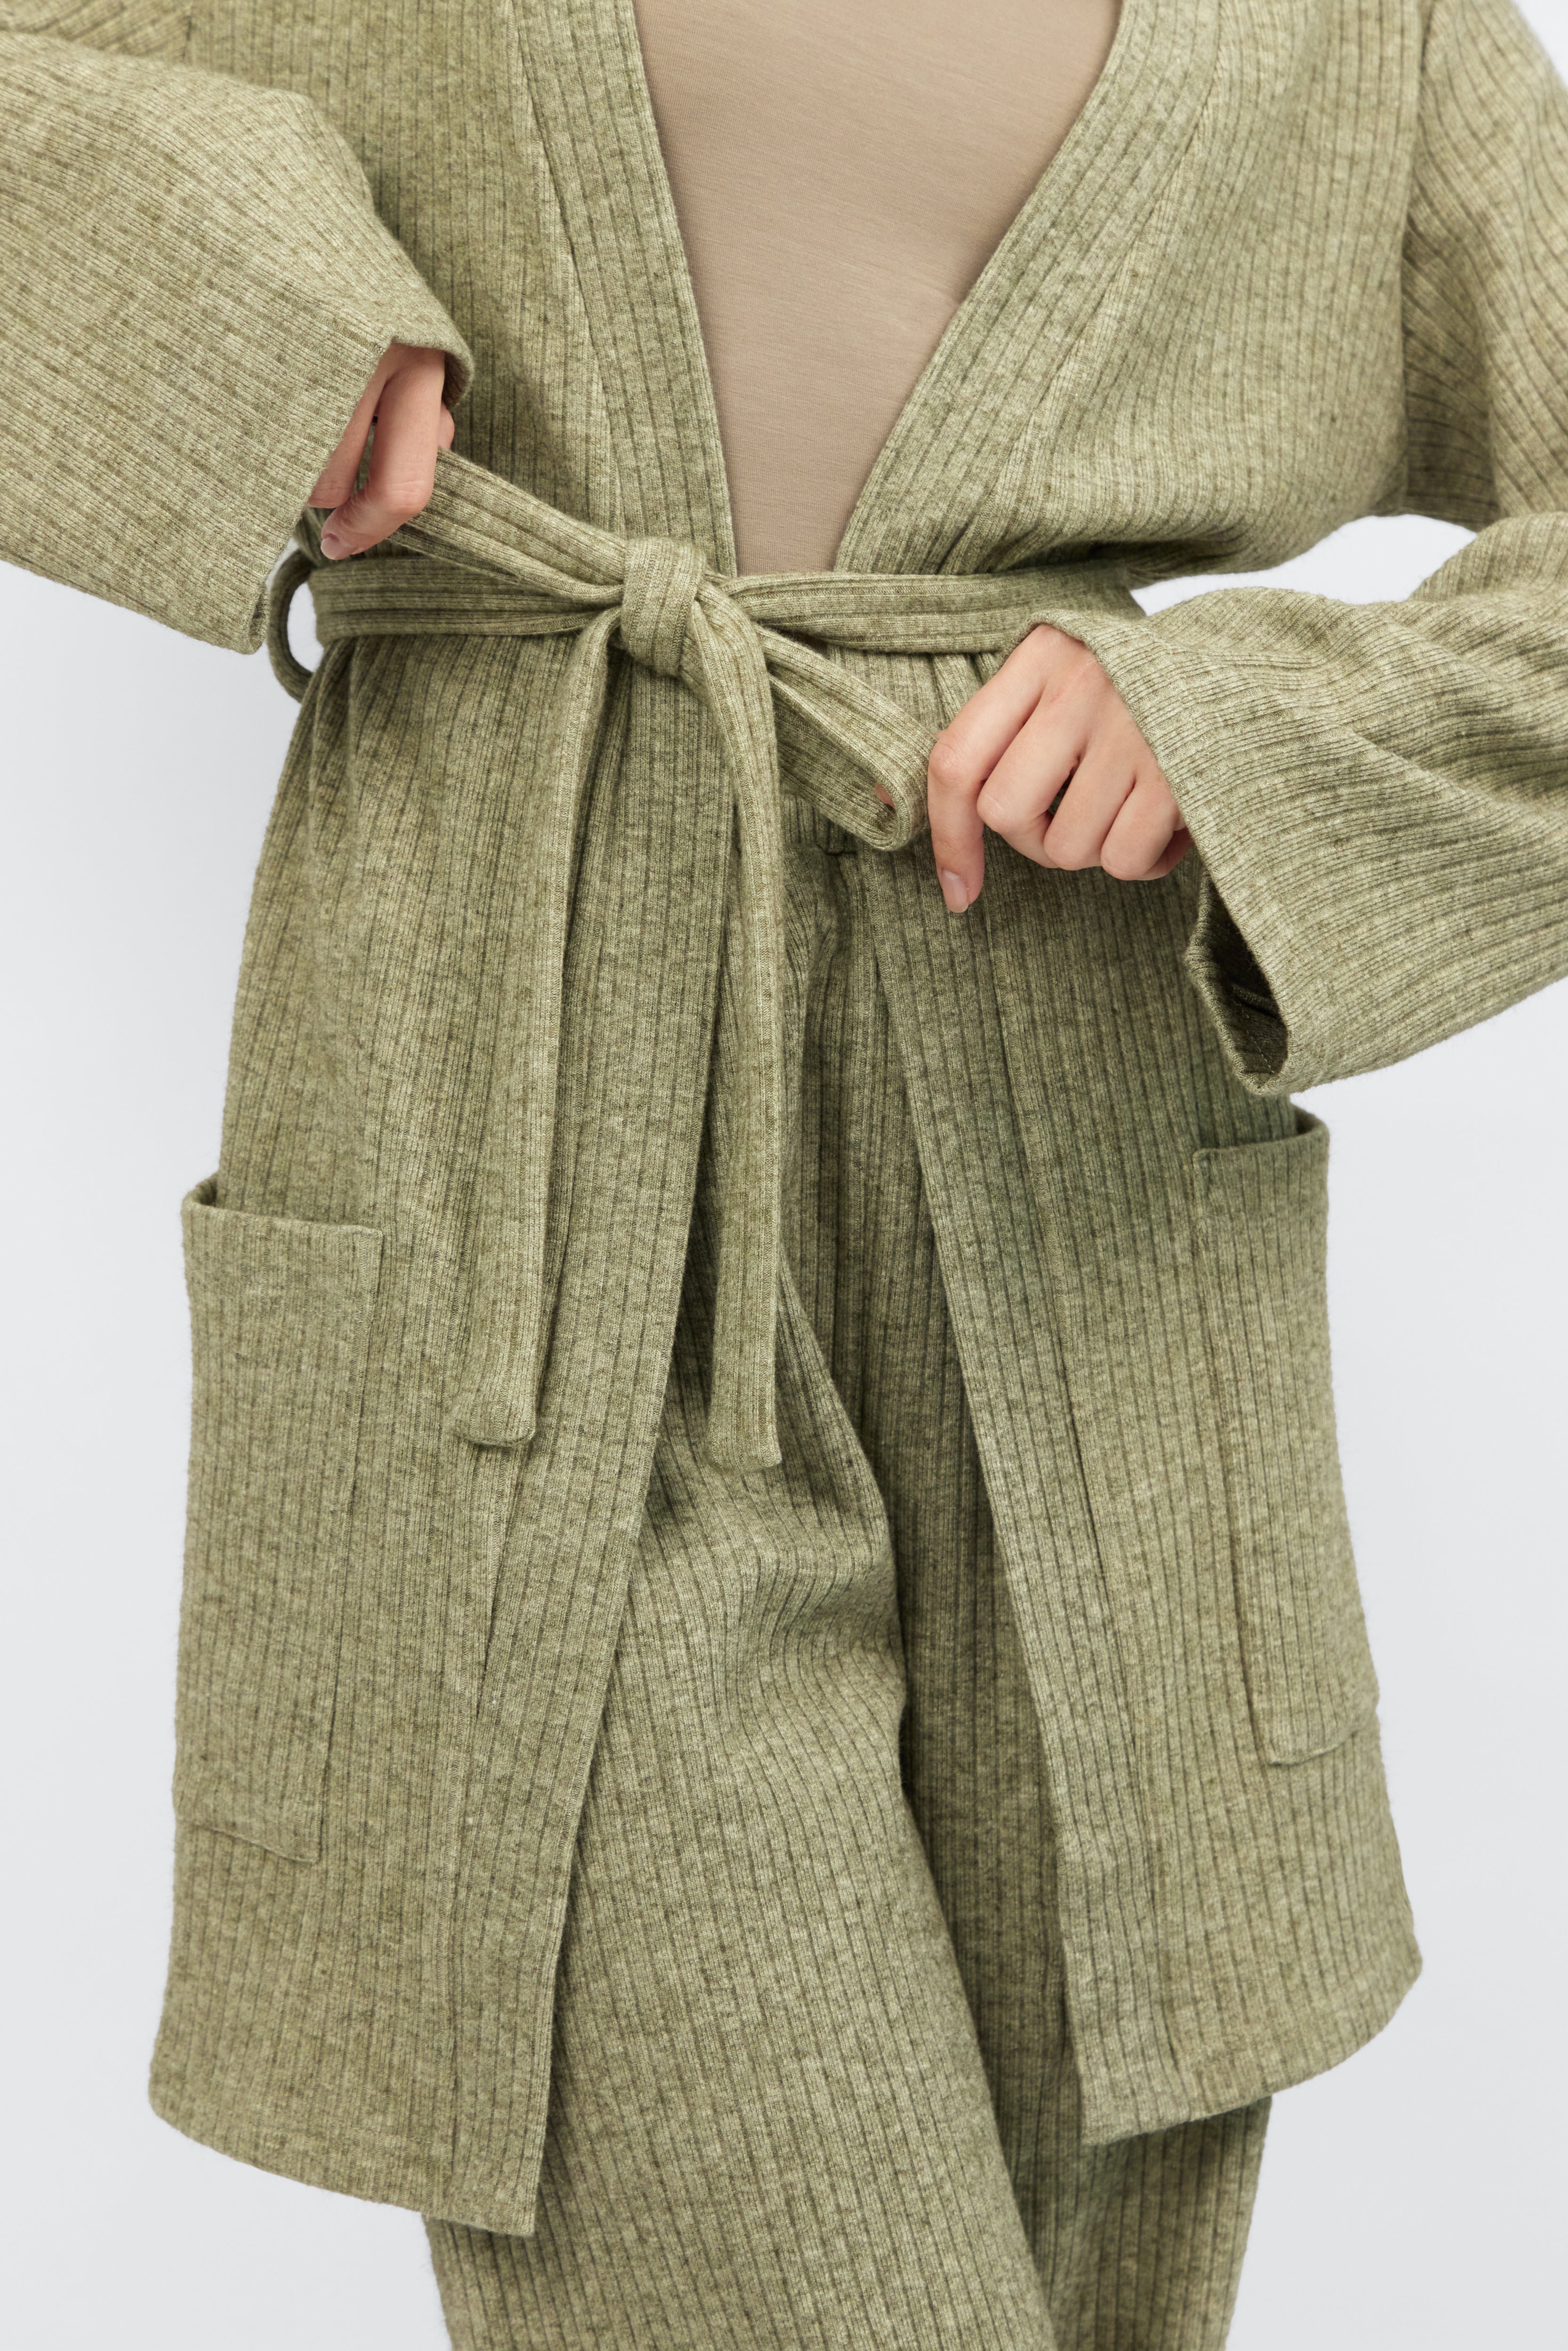 CA - Knit Belted Cardigan - Olive